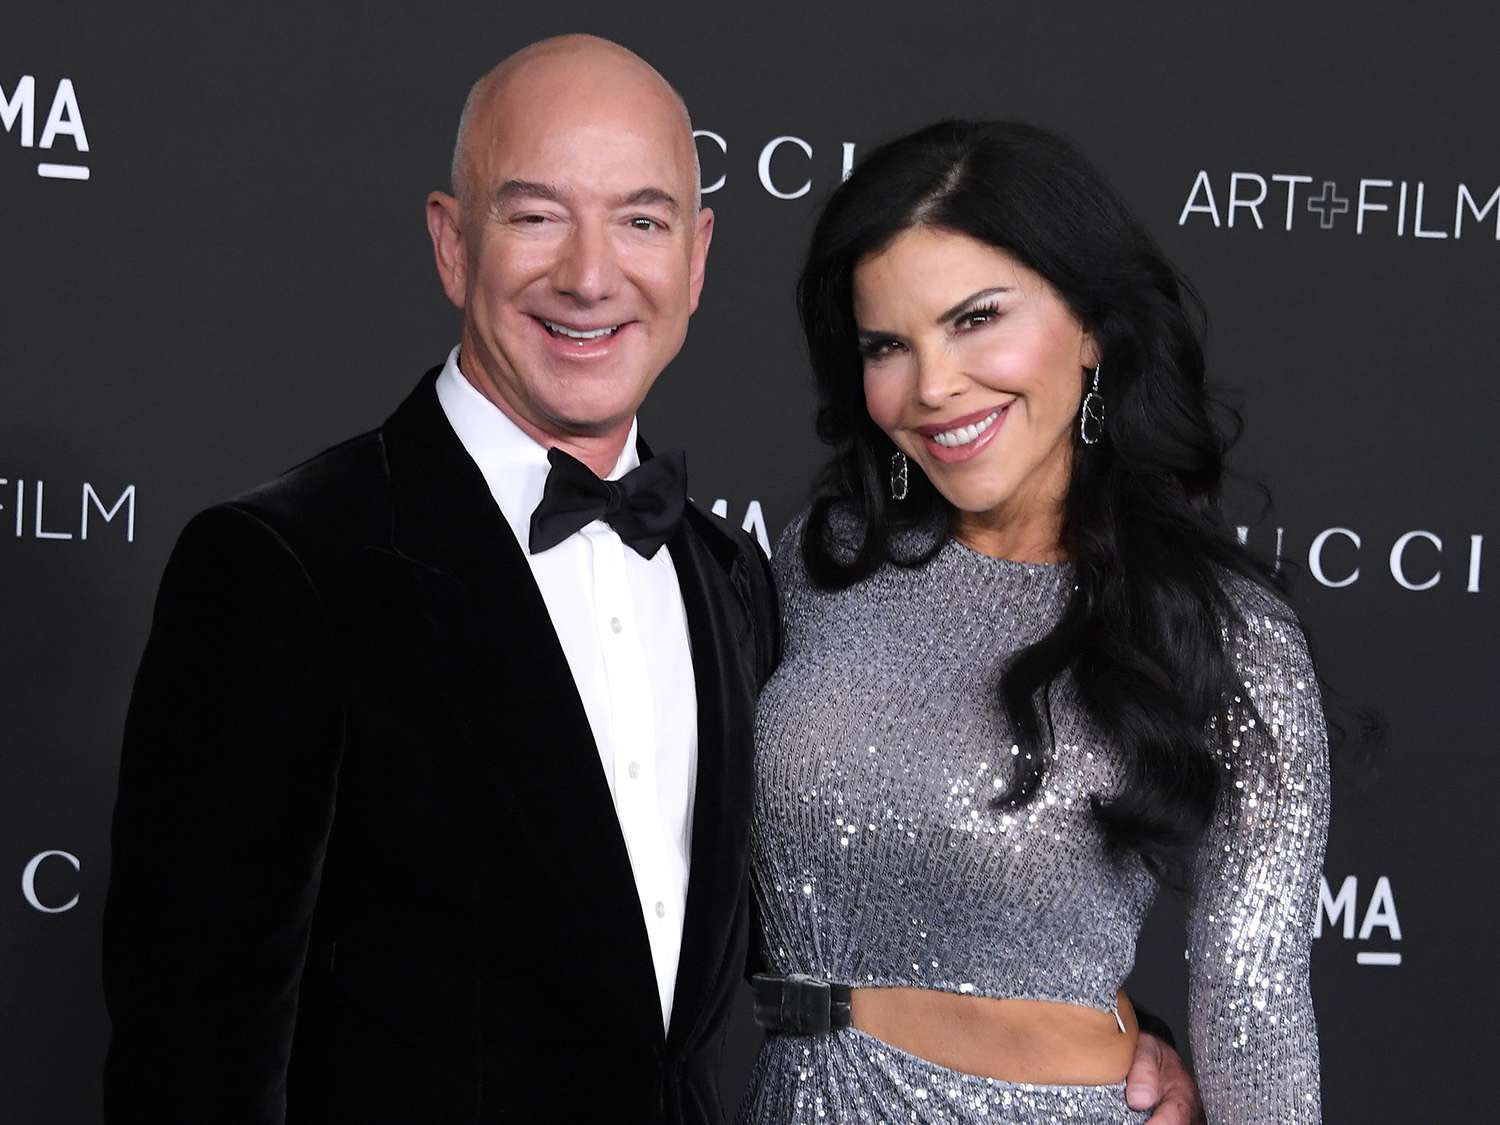 Lauren Sanchez before and after photos: Did Jeff Bezos’ fiancee undergo plastic surgery?